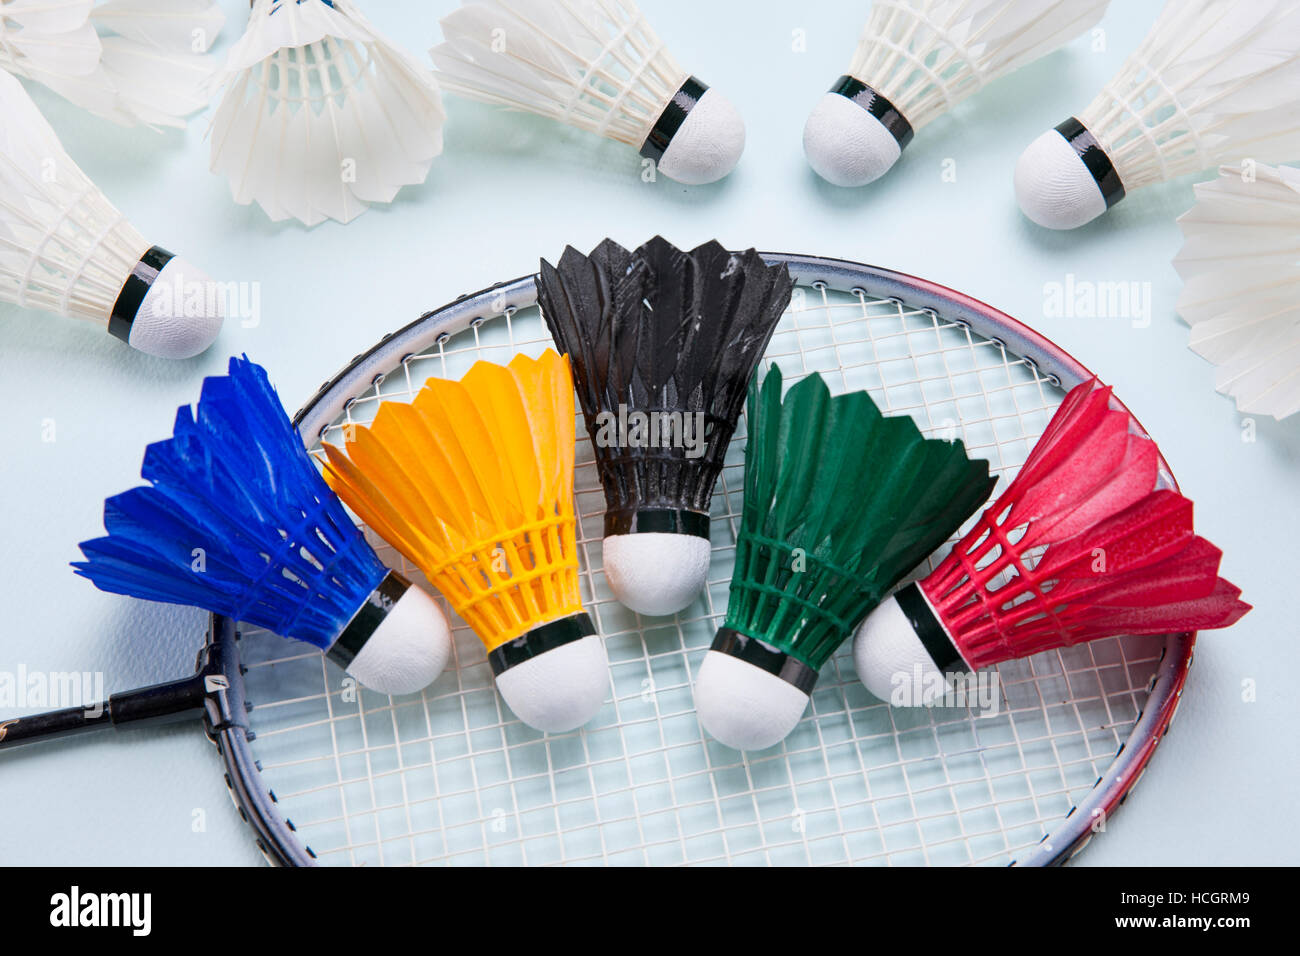 Badminton racket and shuttlecocks as cheering tools Stock Photo